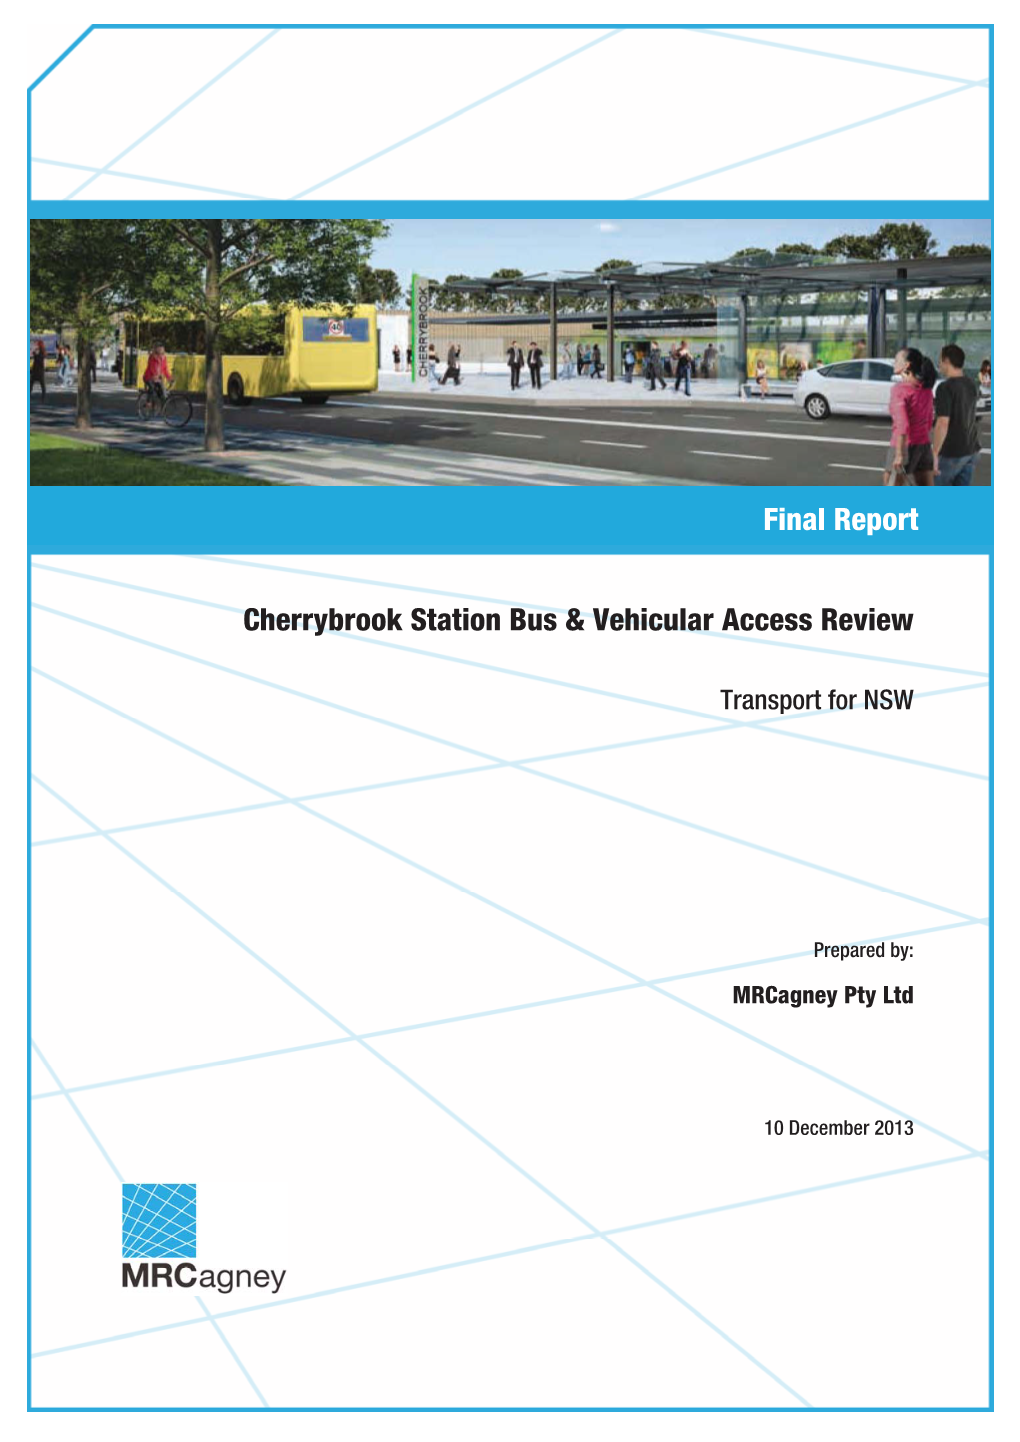 Final Report Cherrybrook Station Bus & Vehicular Access Review